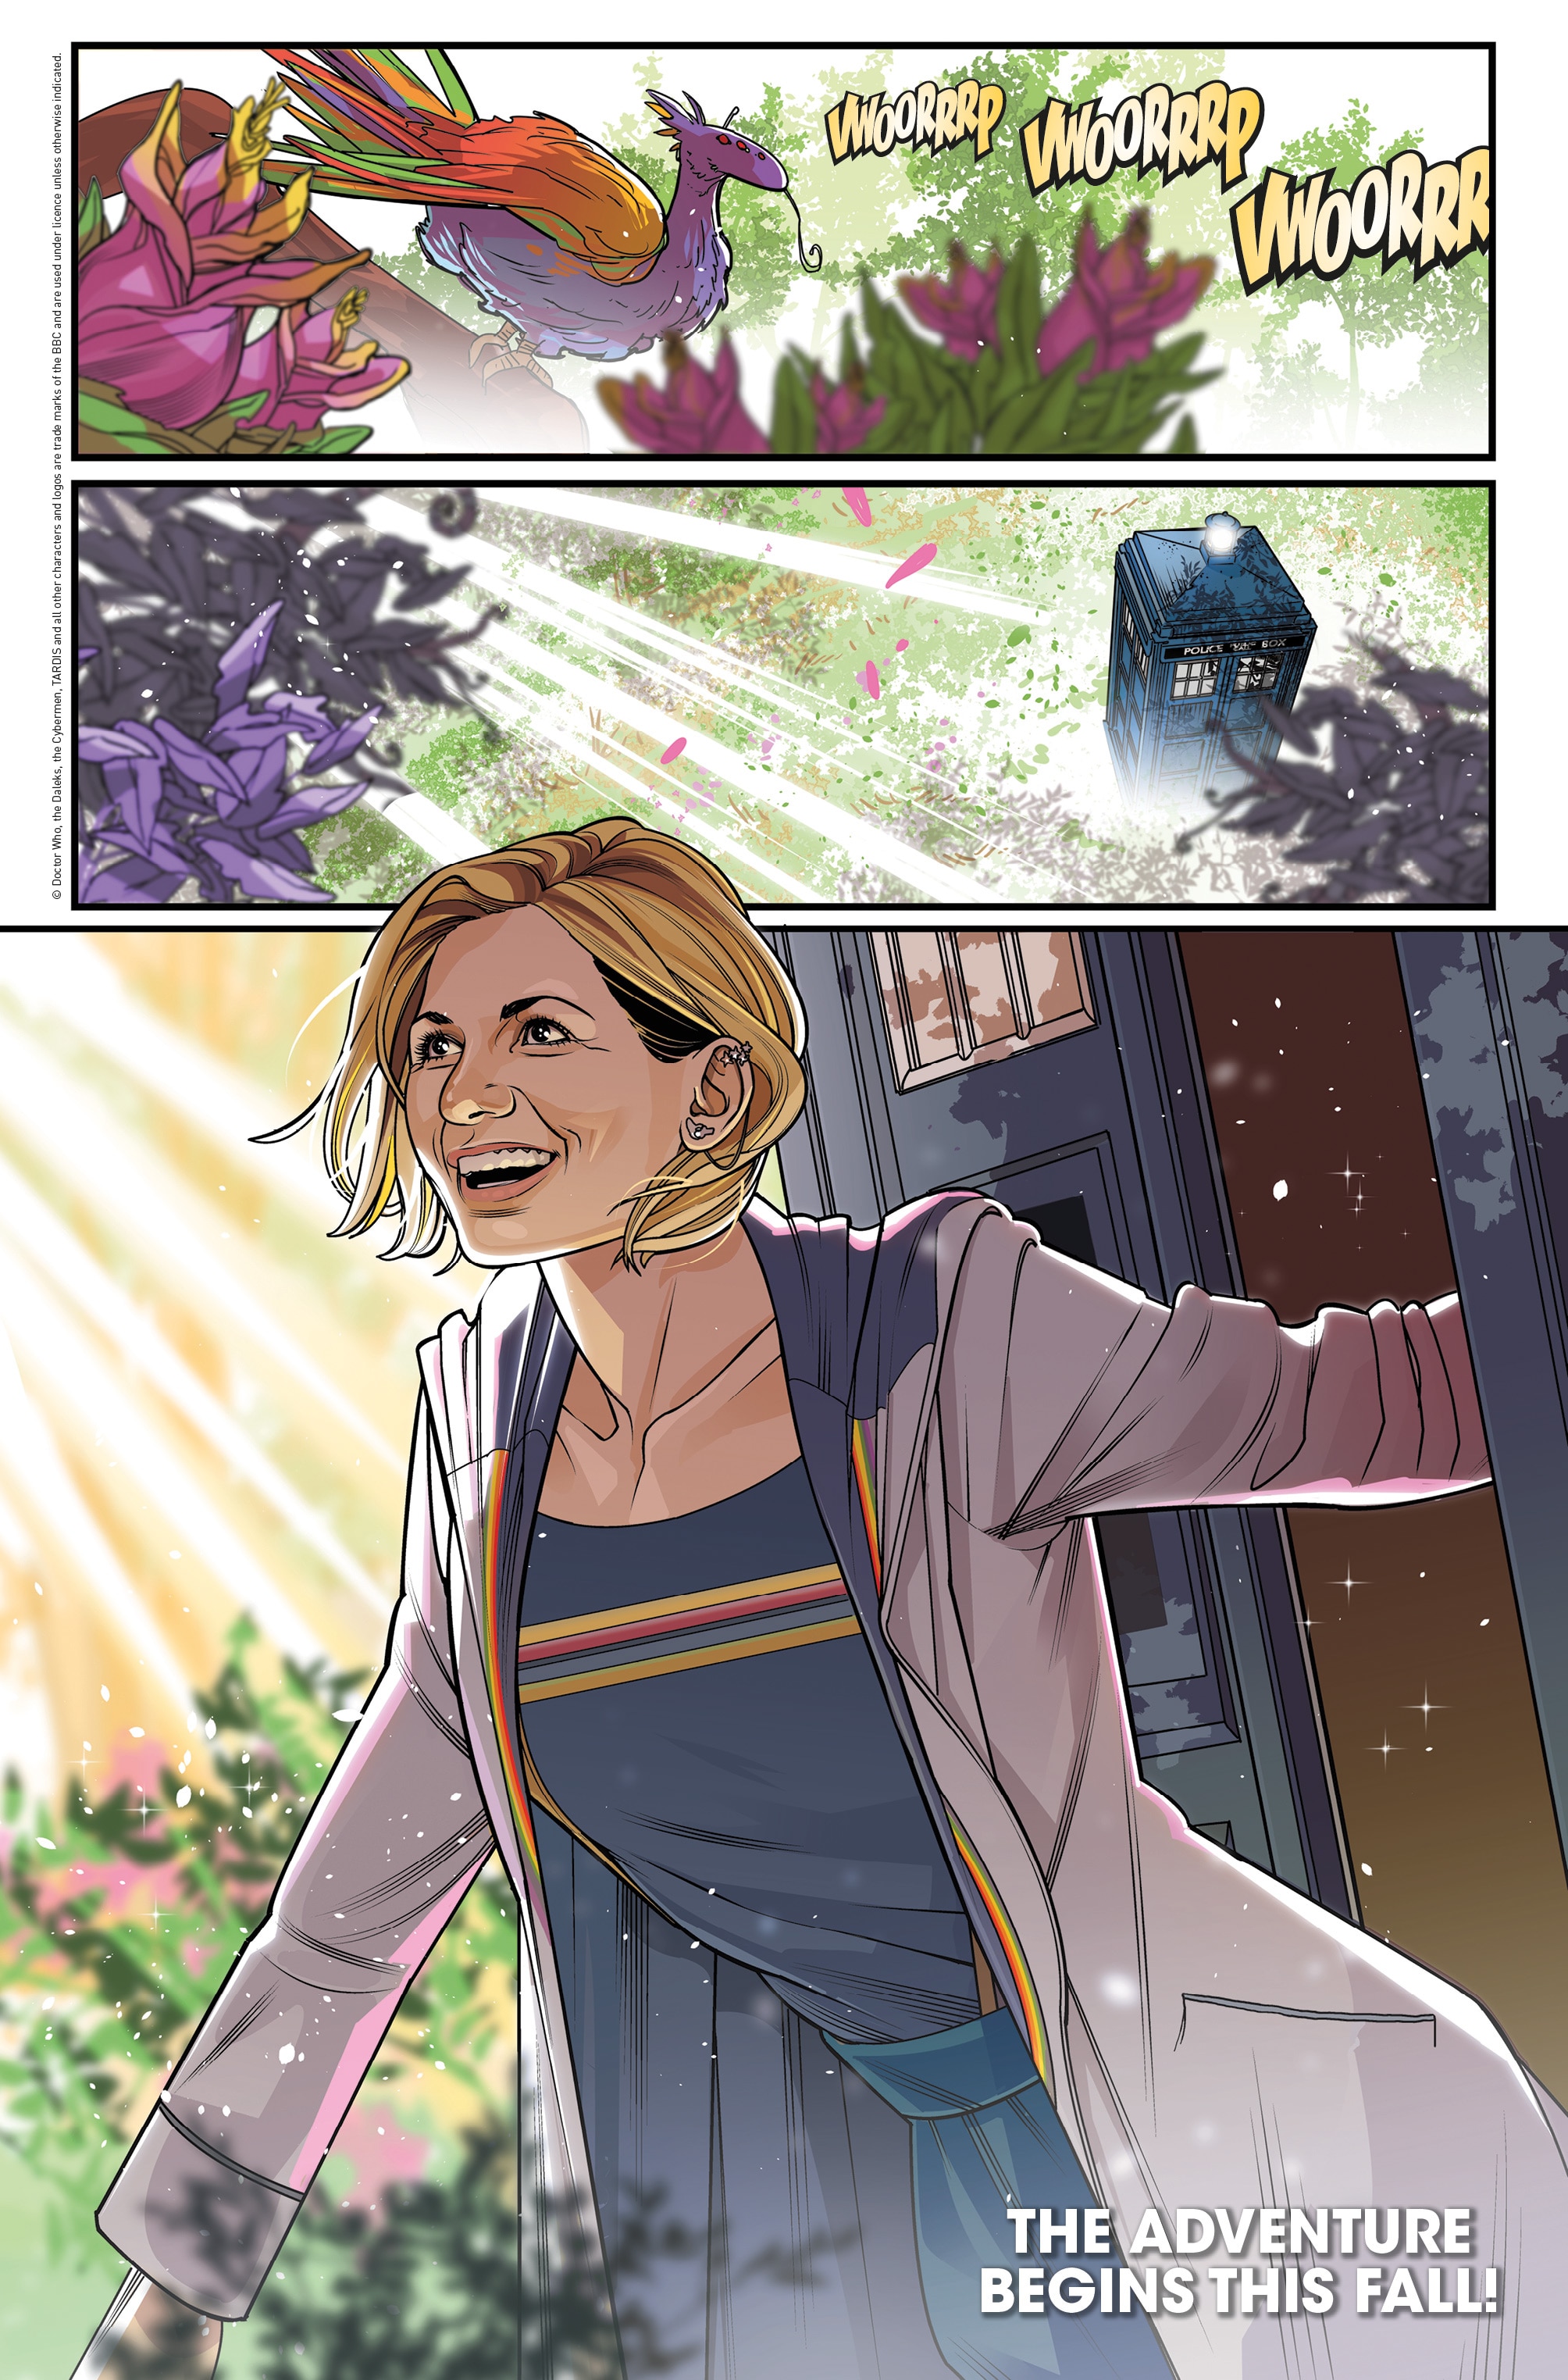 thirteenth doctor comic book cover art